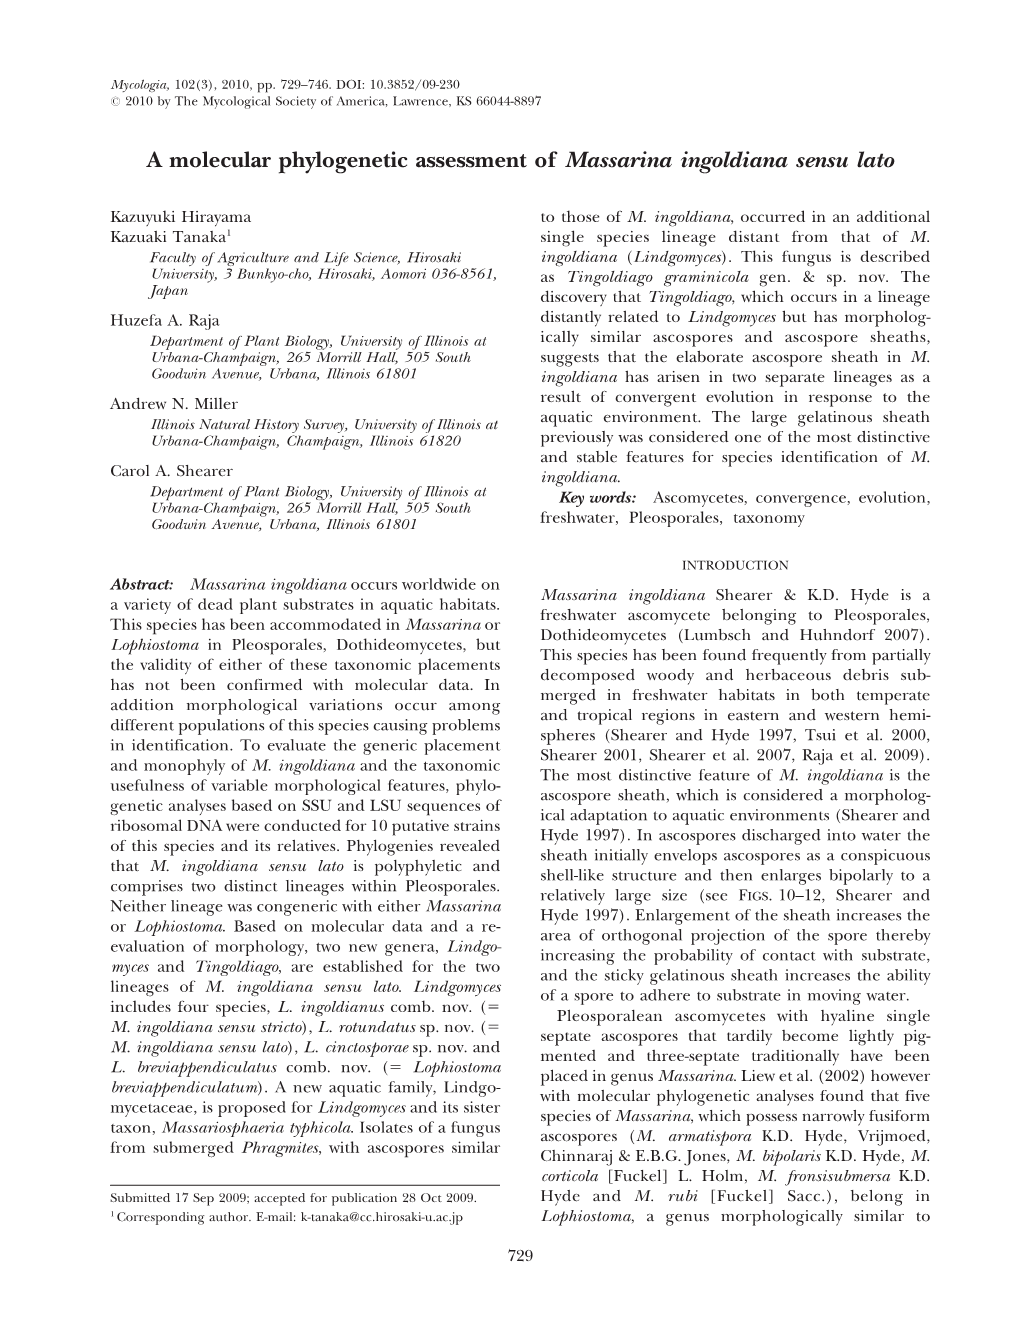 A Molecular Phylogenetic Assessment of Massarina Ingoldiana Sensu Lato